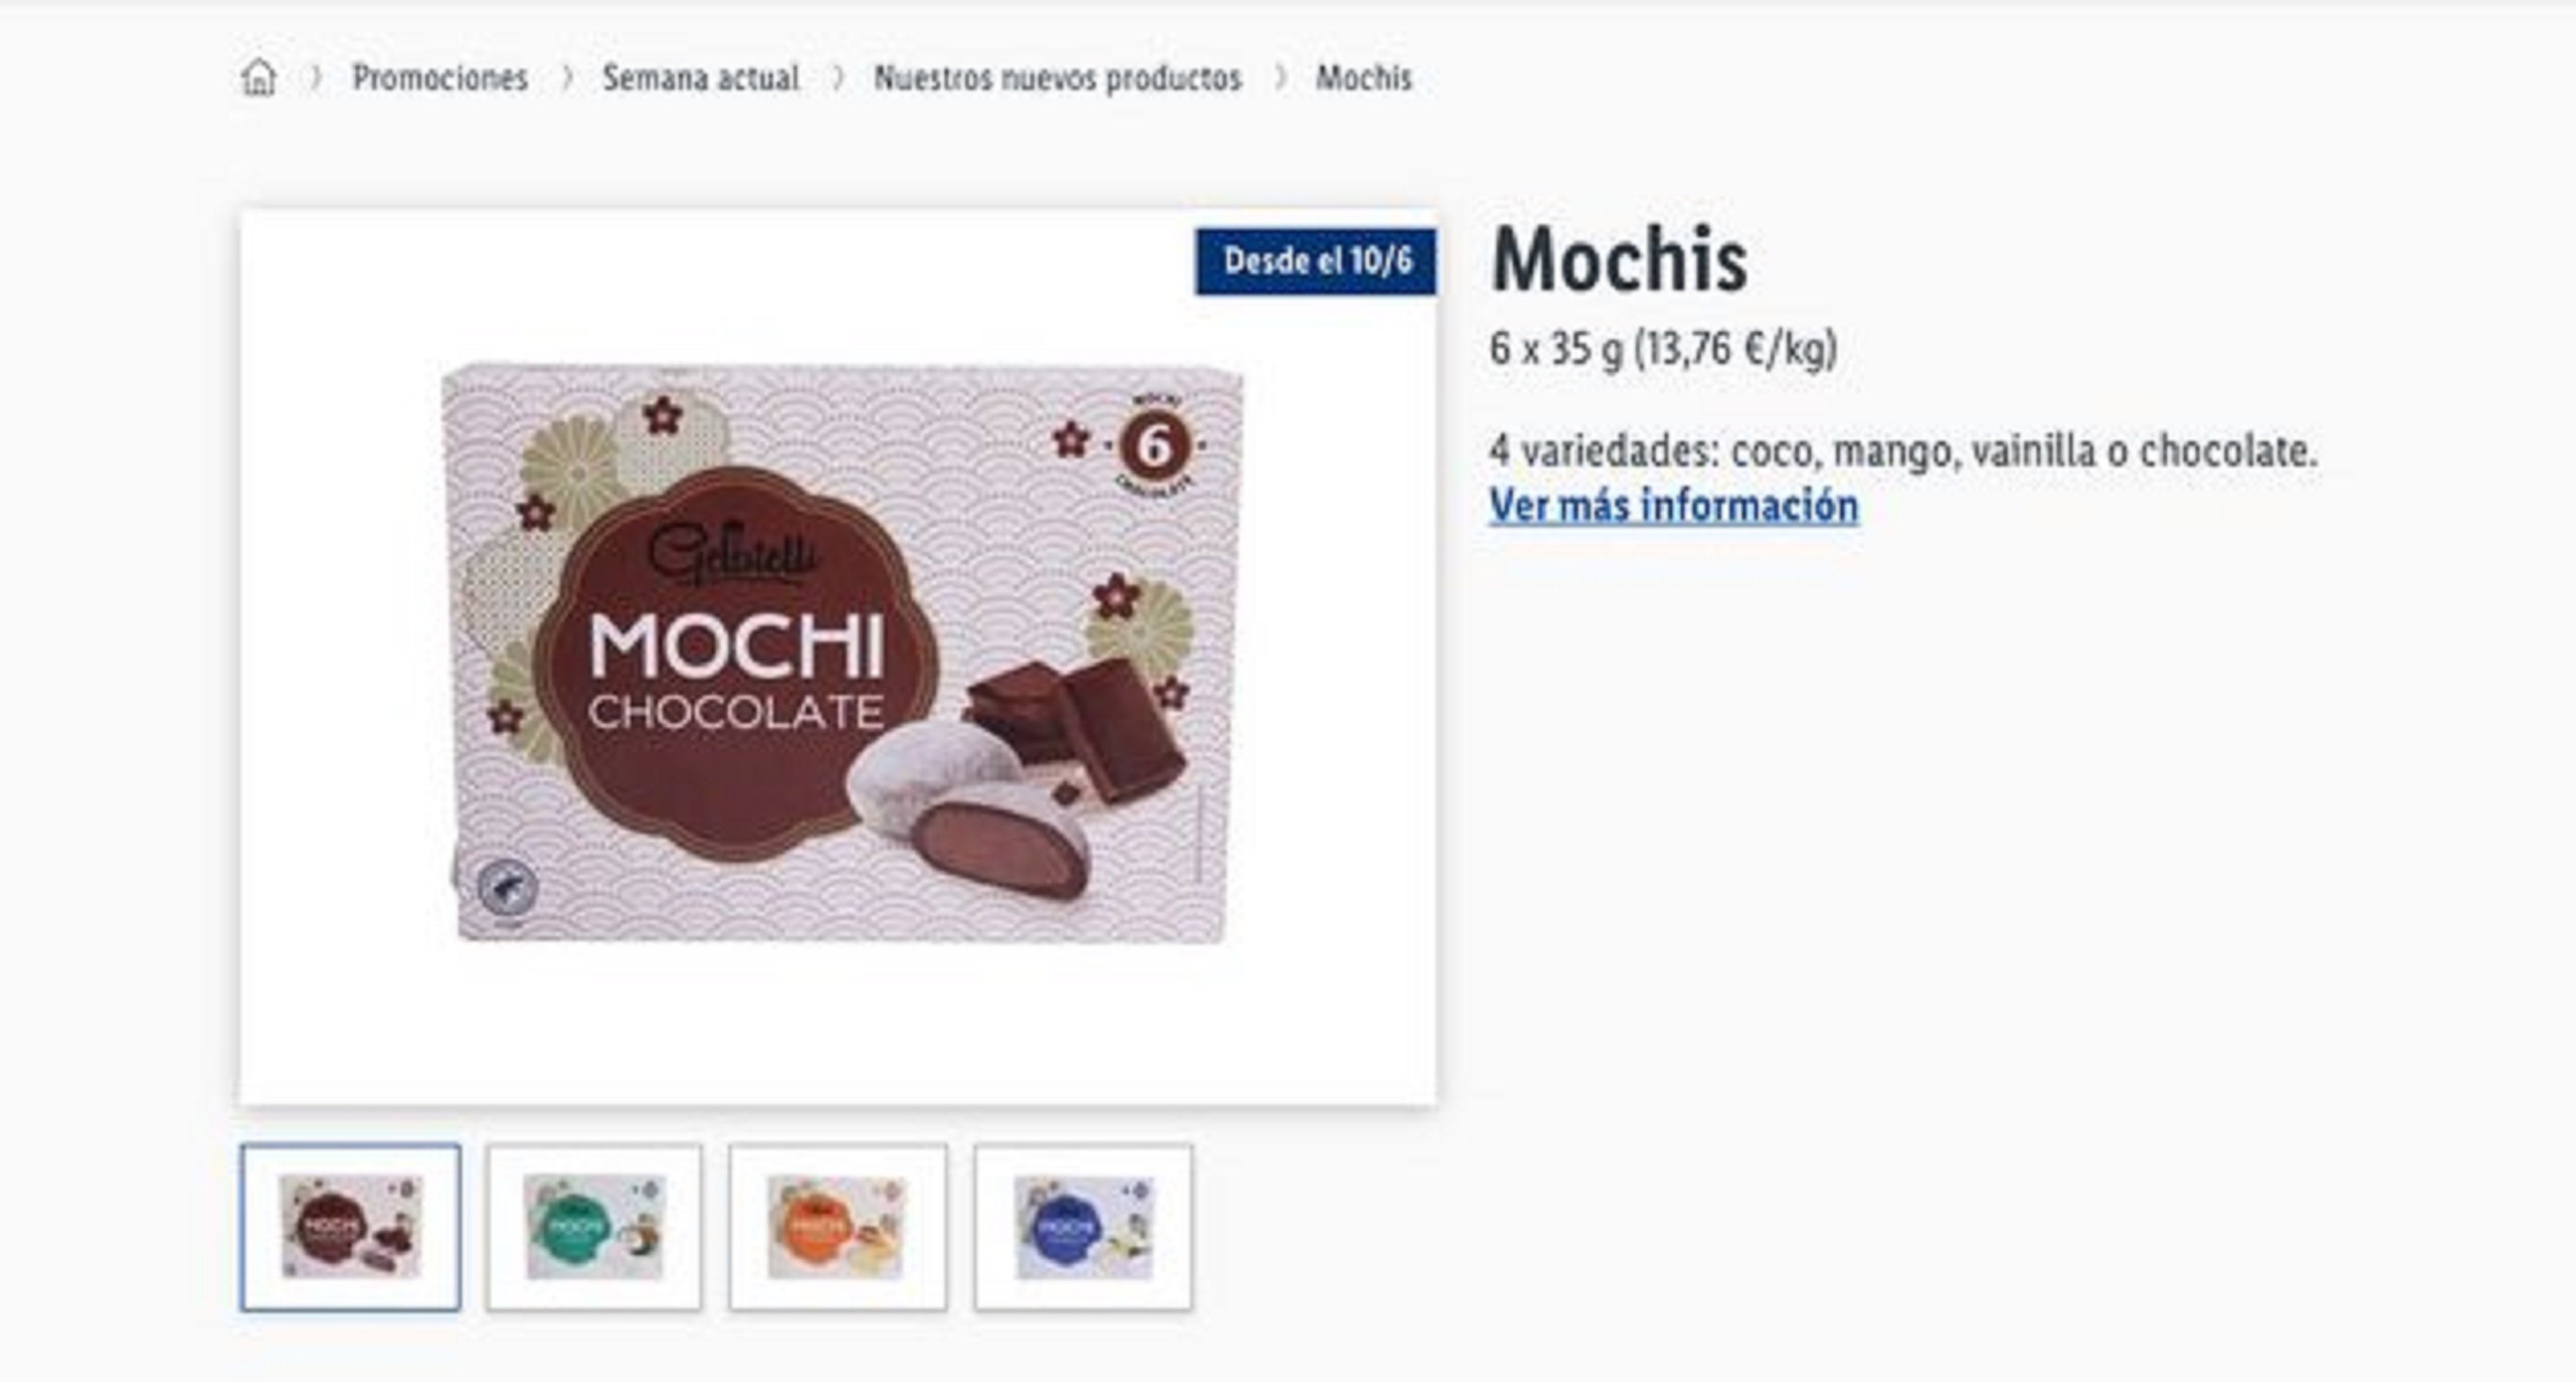 Mochis chocolate Gelatelli / Lidl